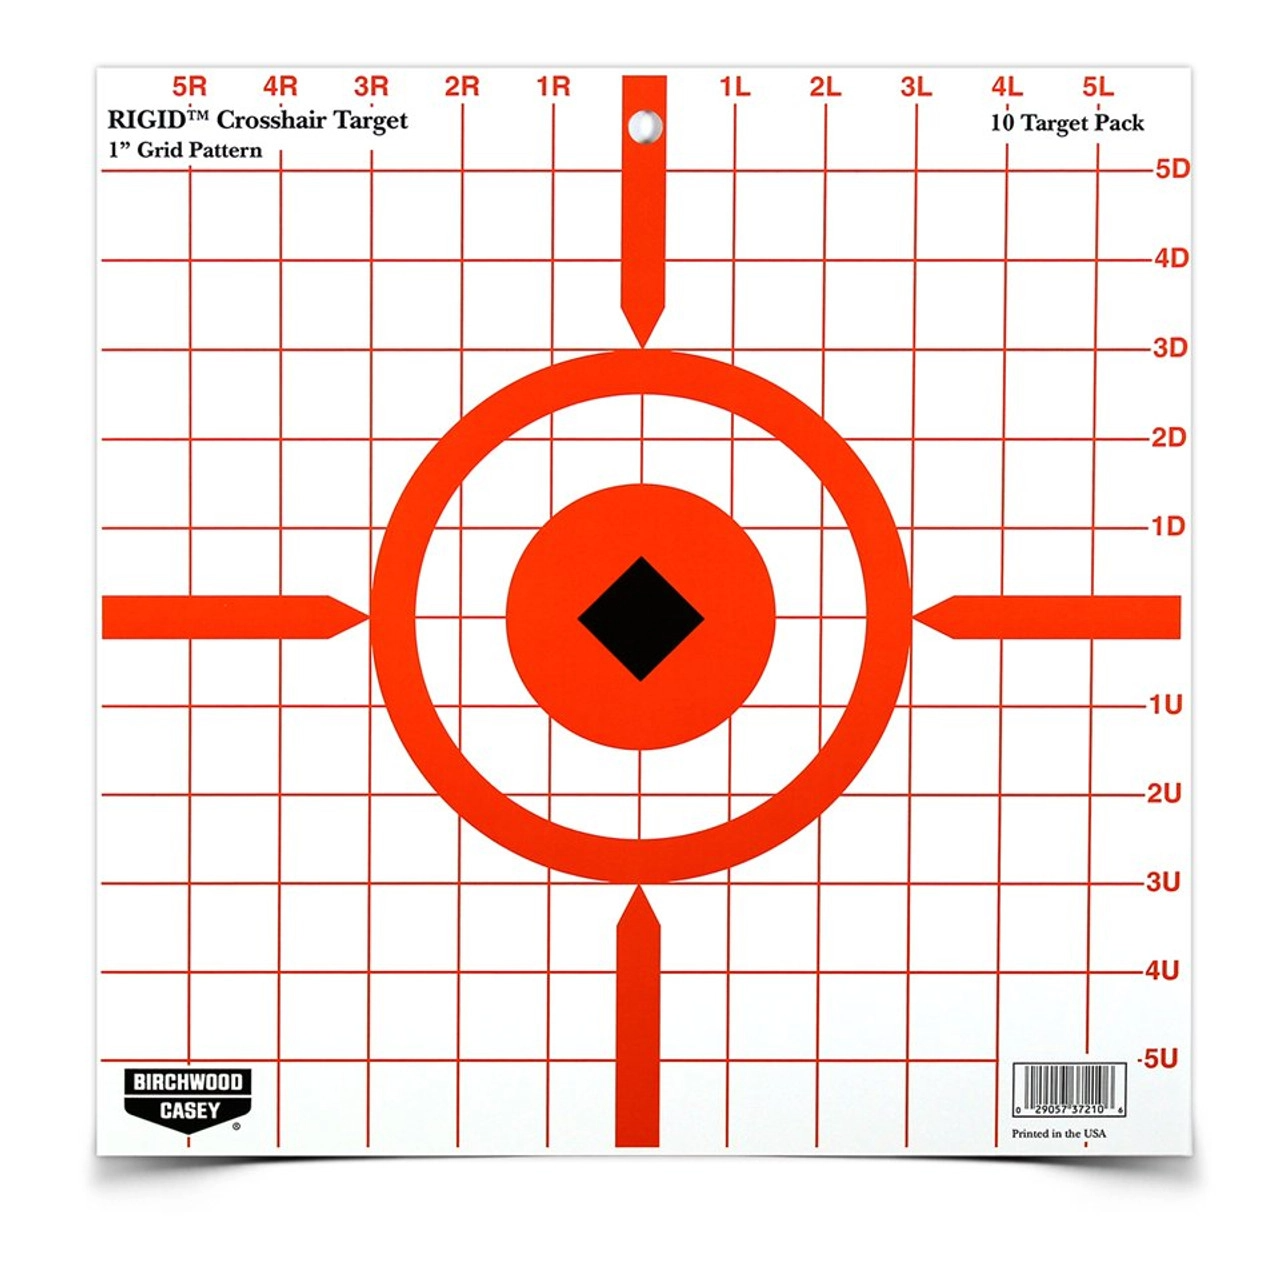 Rigid 12 Inch Crosshair Sight-In, 10 Targets
Birchwood Casey